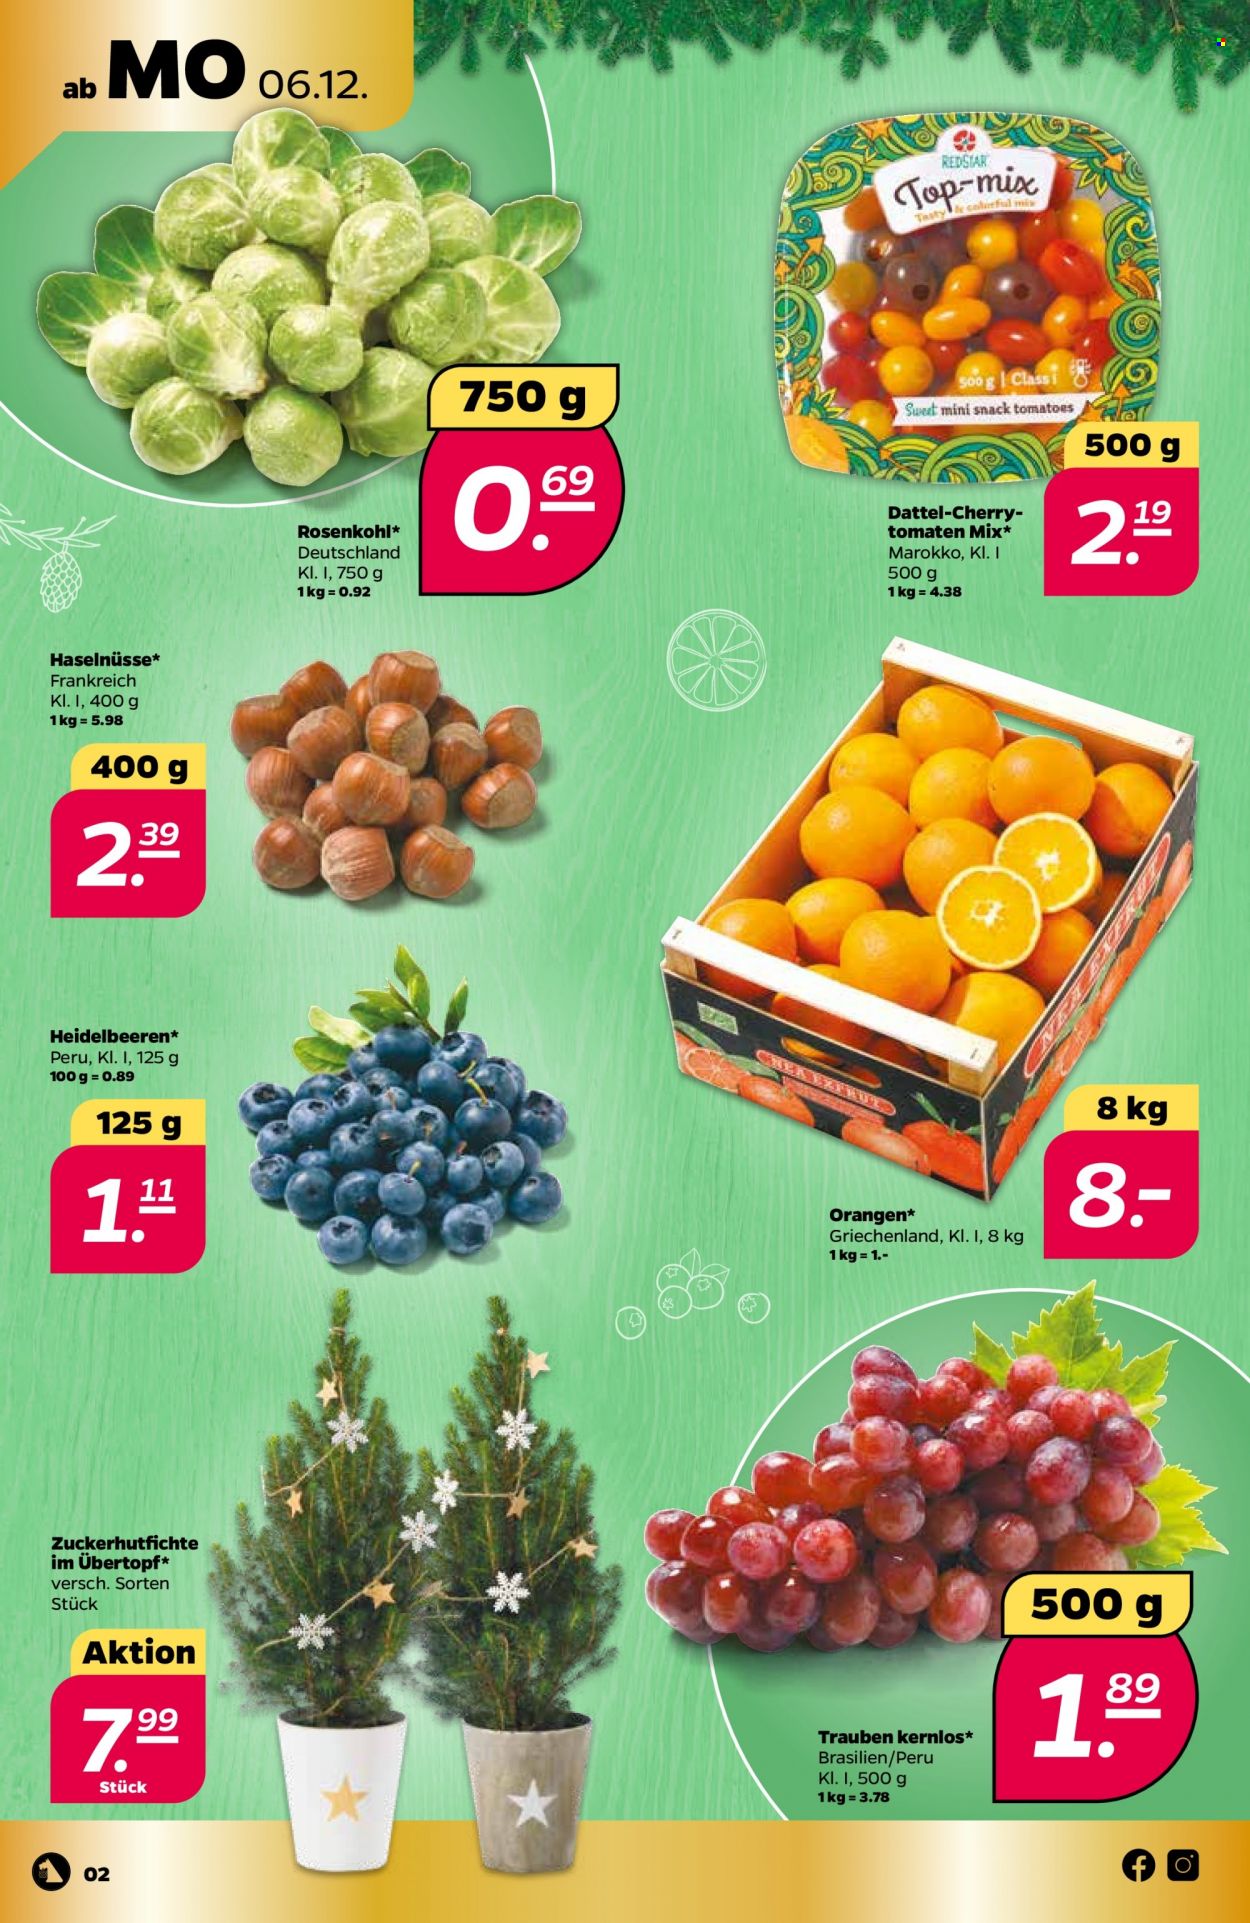 thumbnail - Prospekte Netto - 6.12.2021 - 11.12.2021 - Produkte in Aktion - Tomaten, Rosenkohl, Trauben, Orangen, Heidelbeeren, Haselnuss, Sweathose. Seite 2.